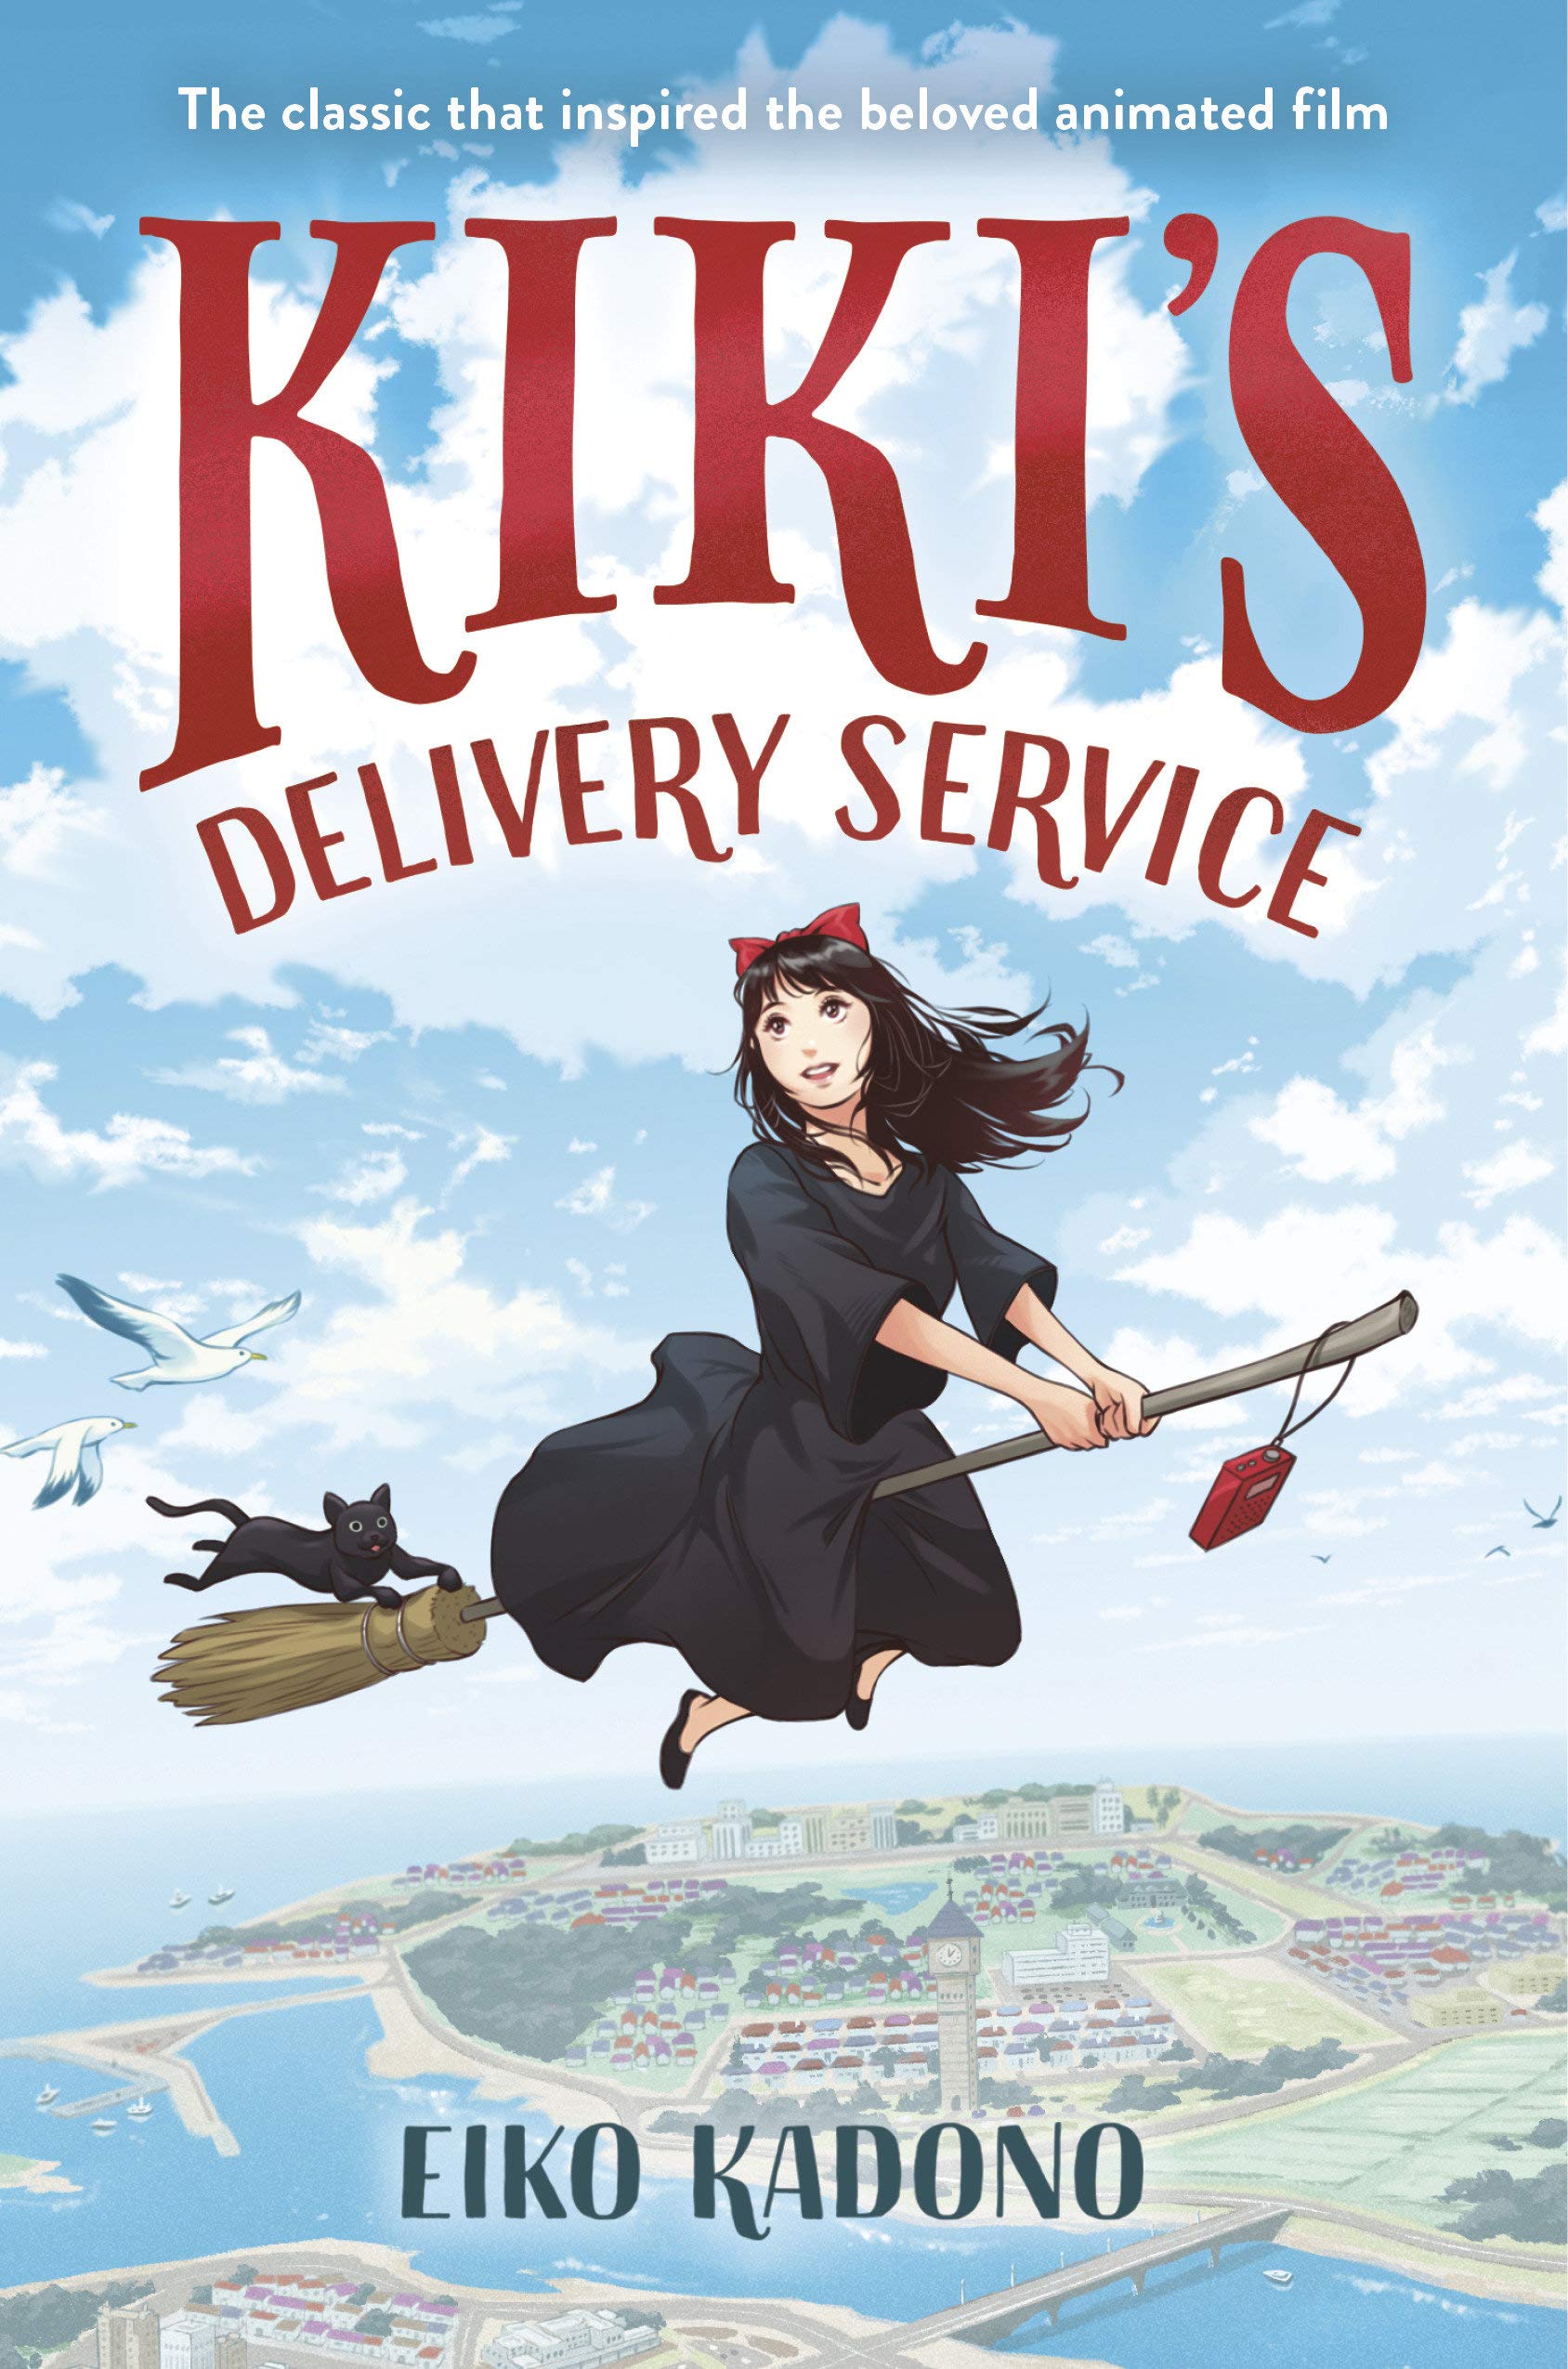 kiki's delivery service essay